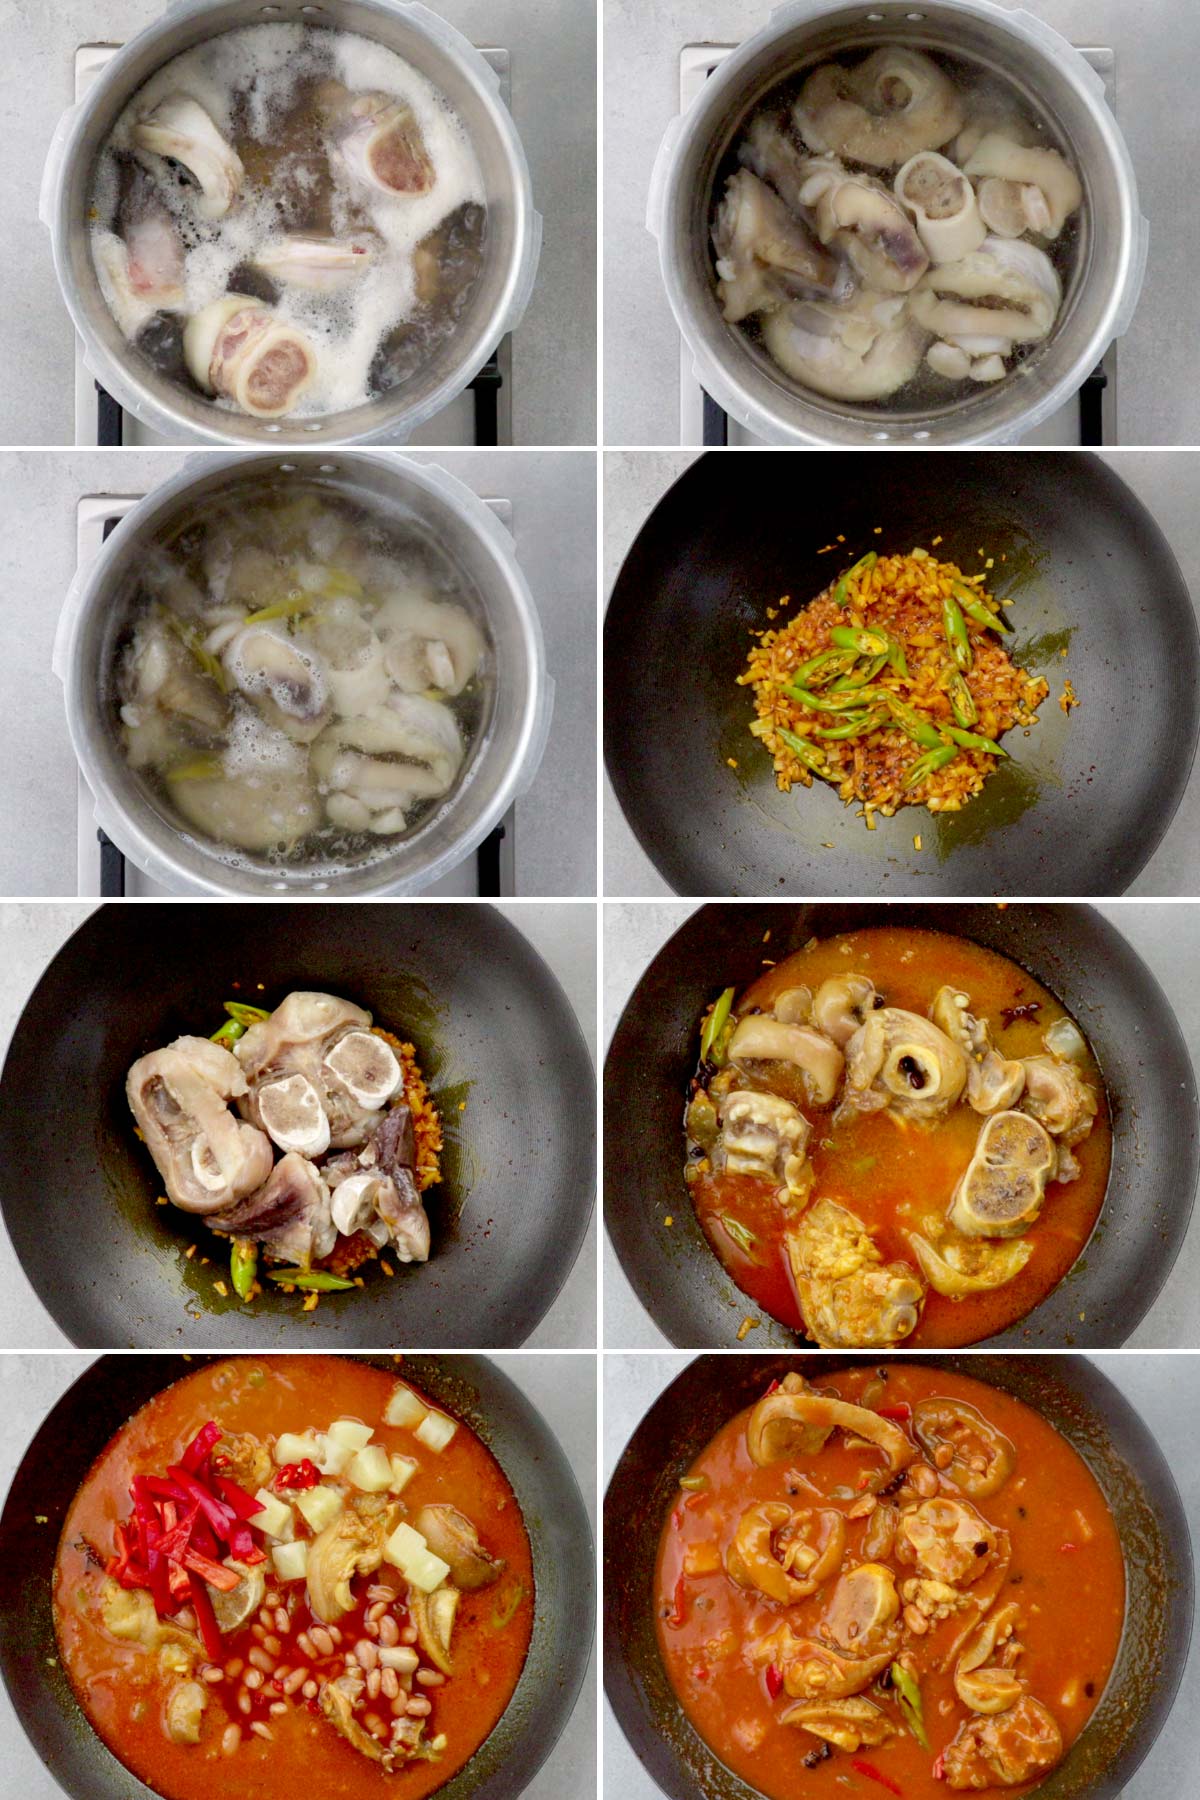 Steps on how to cook Balbacua.